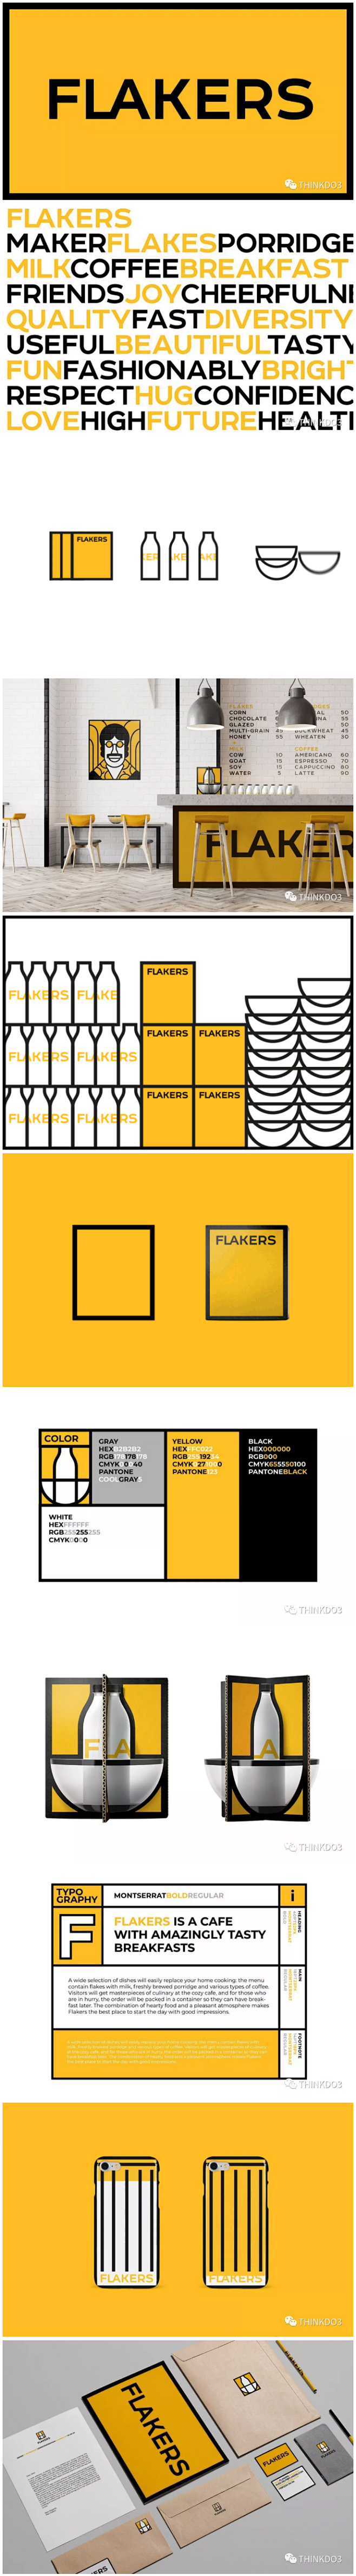 【Flakers早餐咖啡店品牌创意设计】...